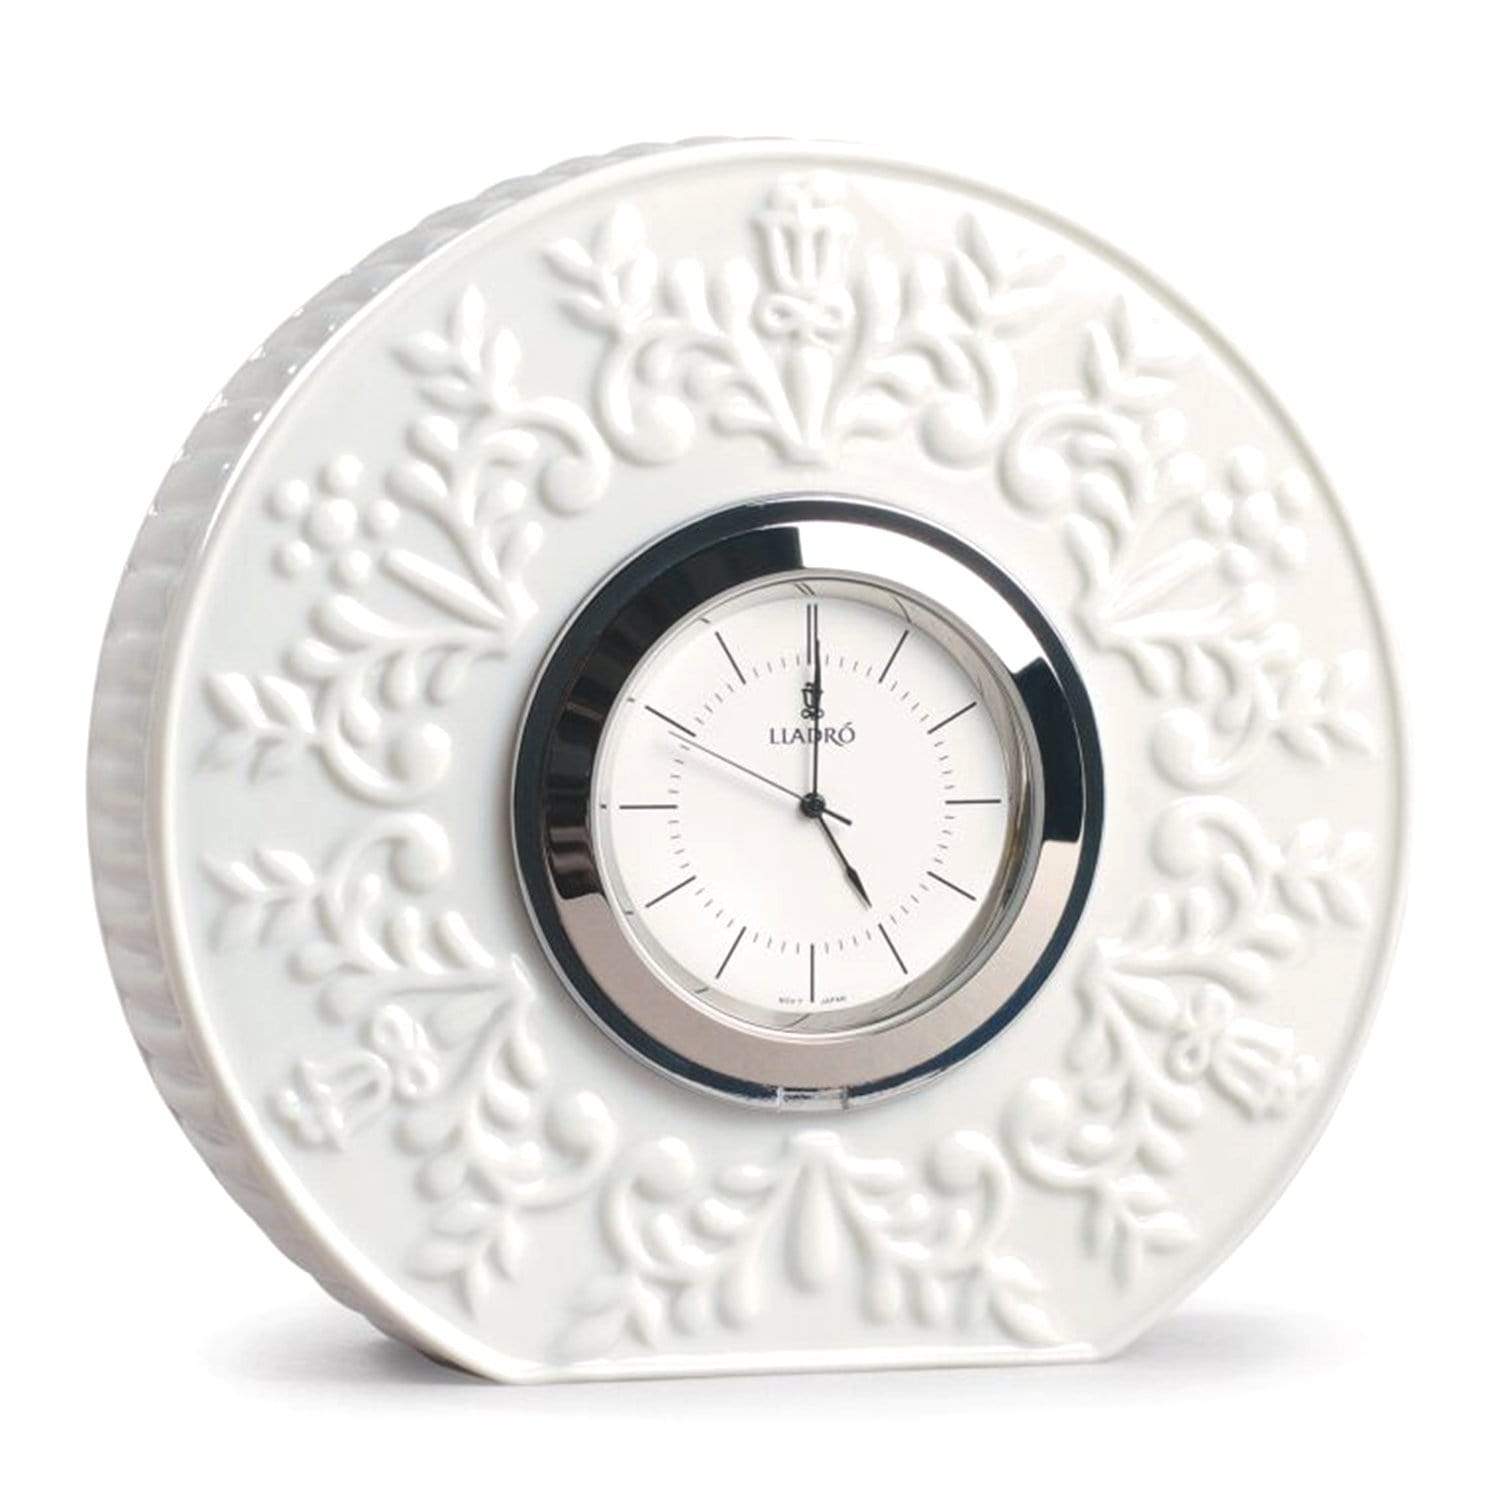 Lladro Logos Decorative Table Clock - 1009603 - Jashanmal Home